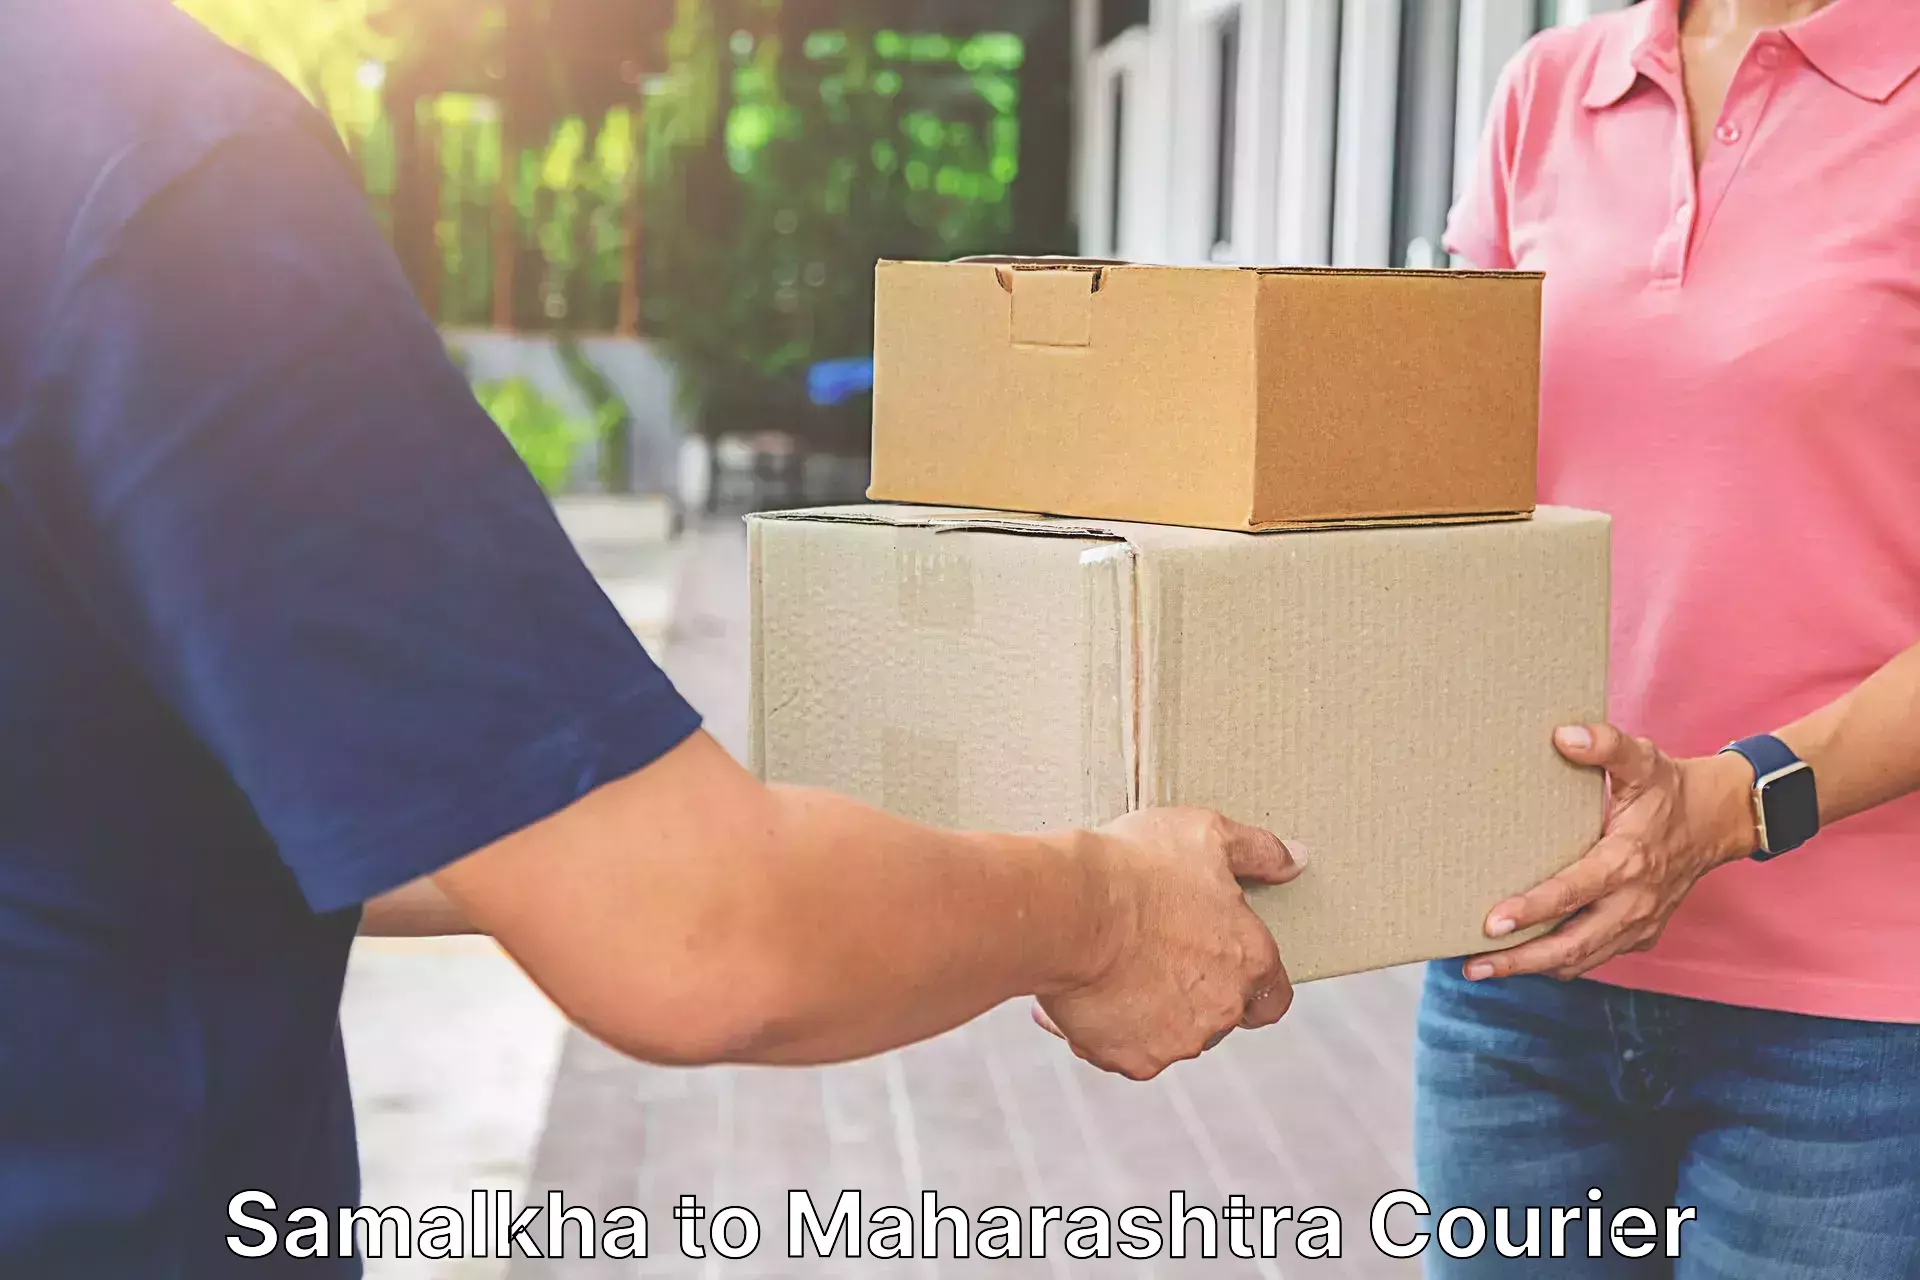 Courier service innovation Samalkha to Lonar